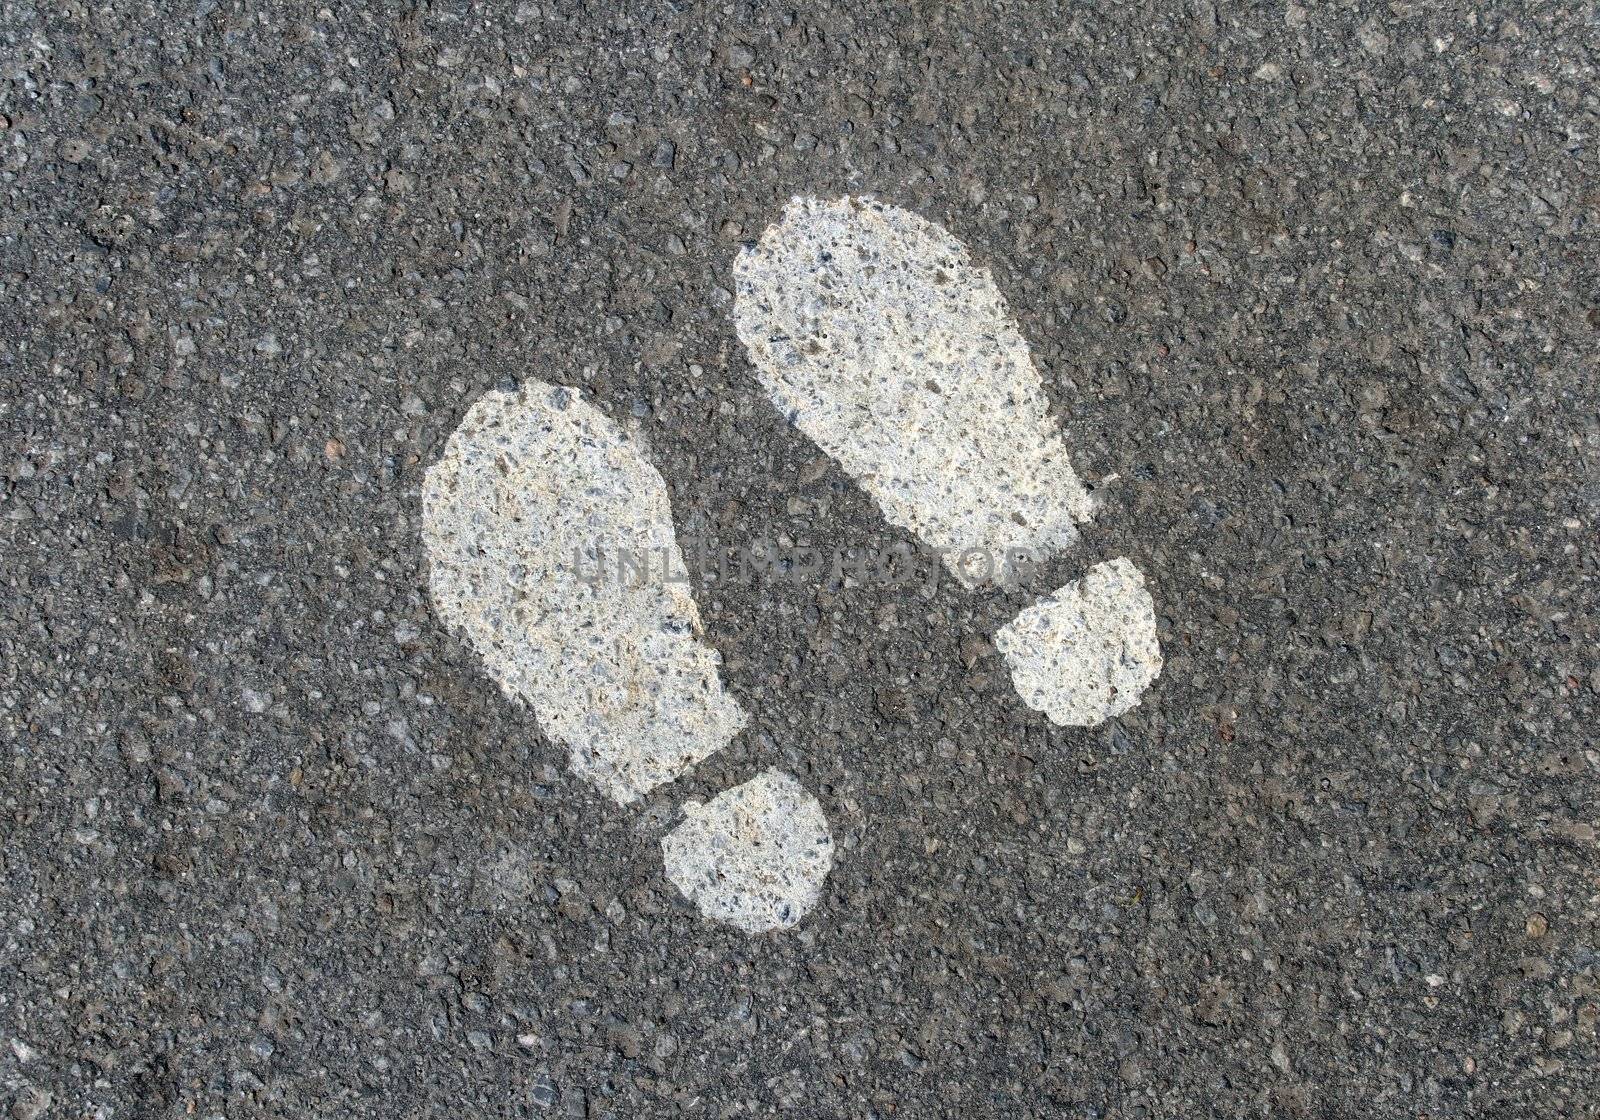 White painted footprints on asphalt road.